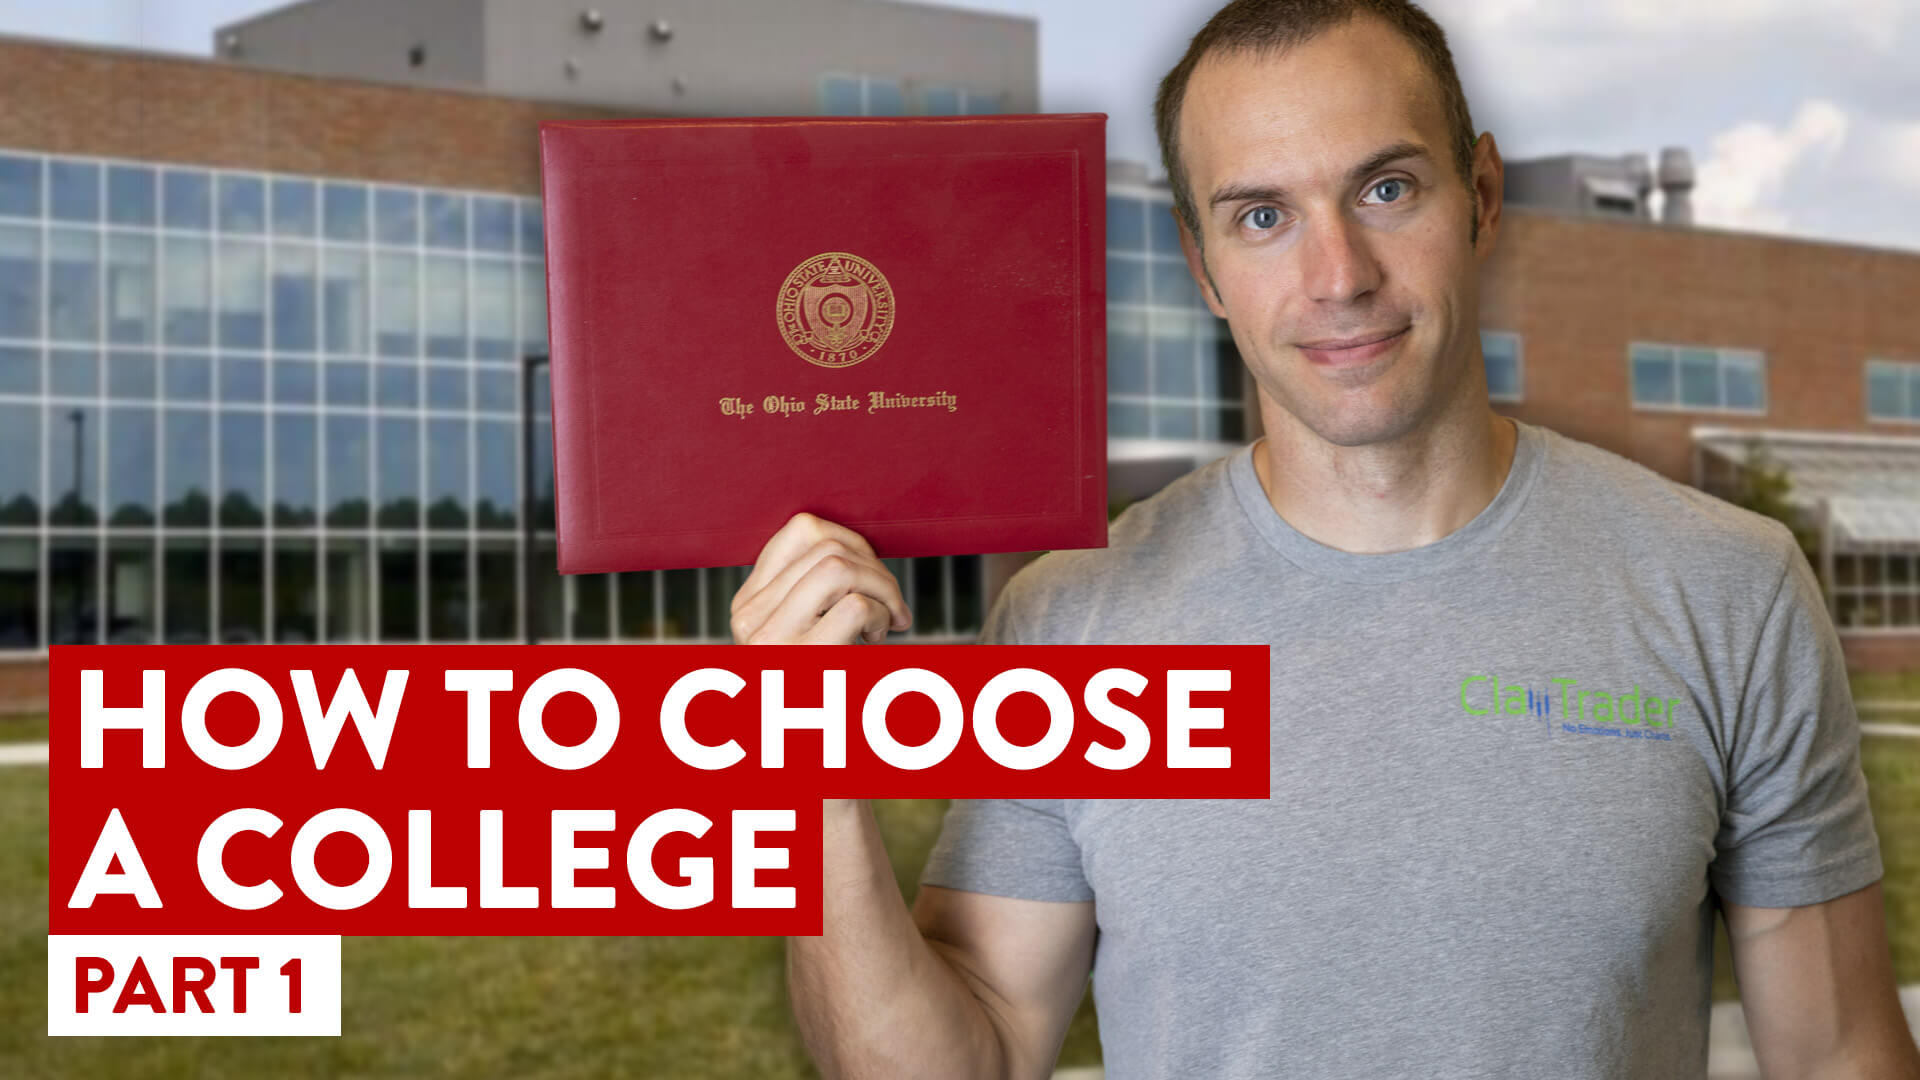 Choosing a college